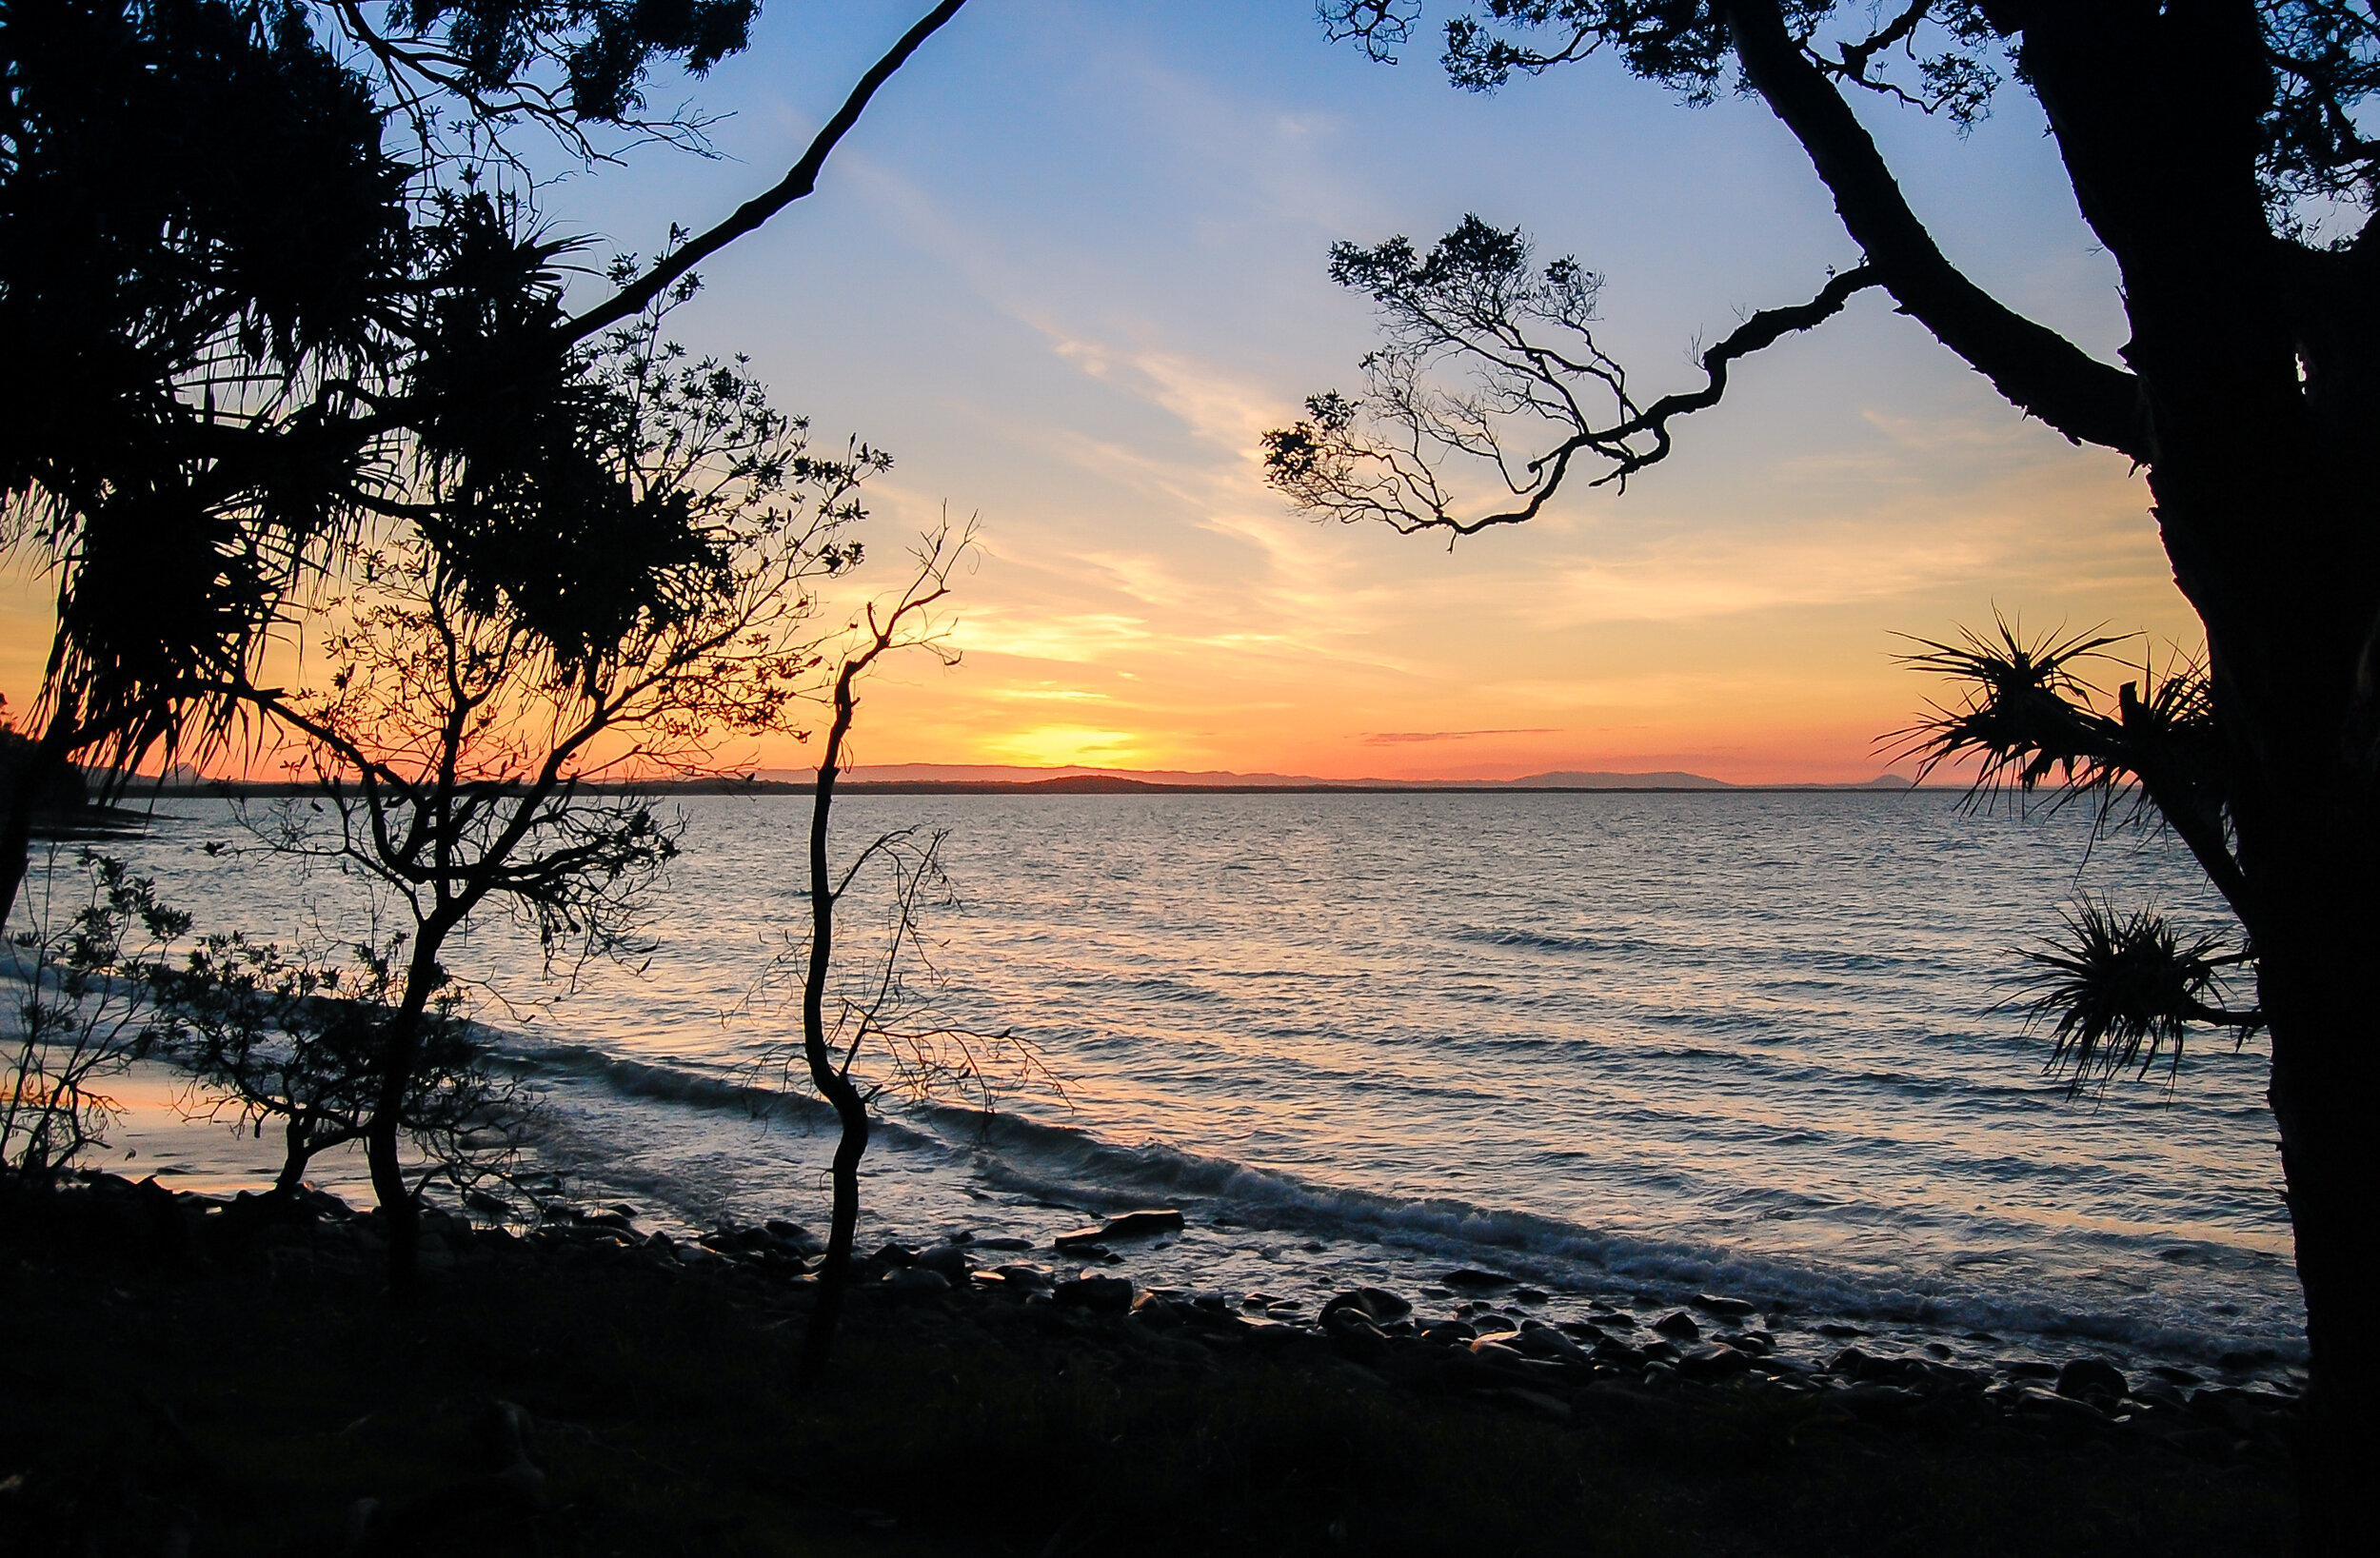 Sunset at Noosa National Park, Queensland, Australia